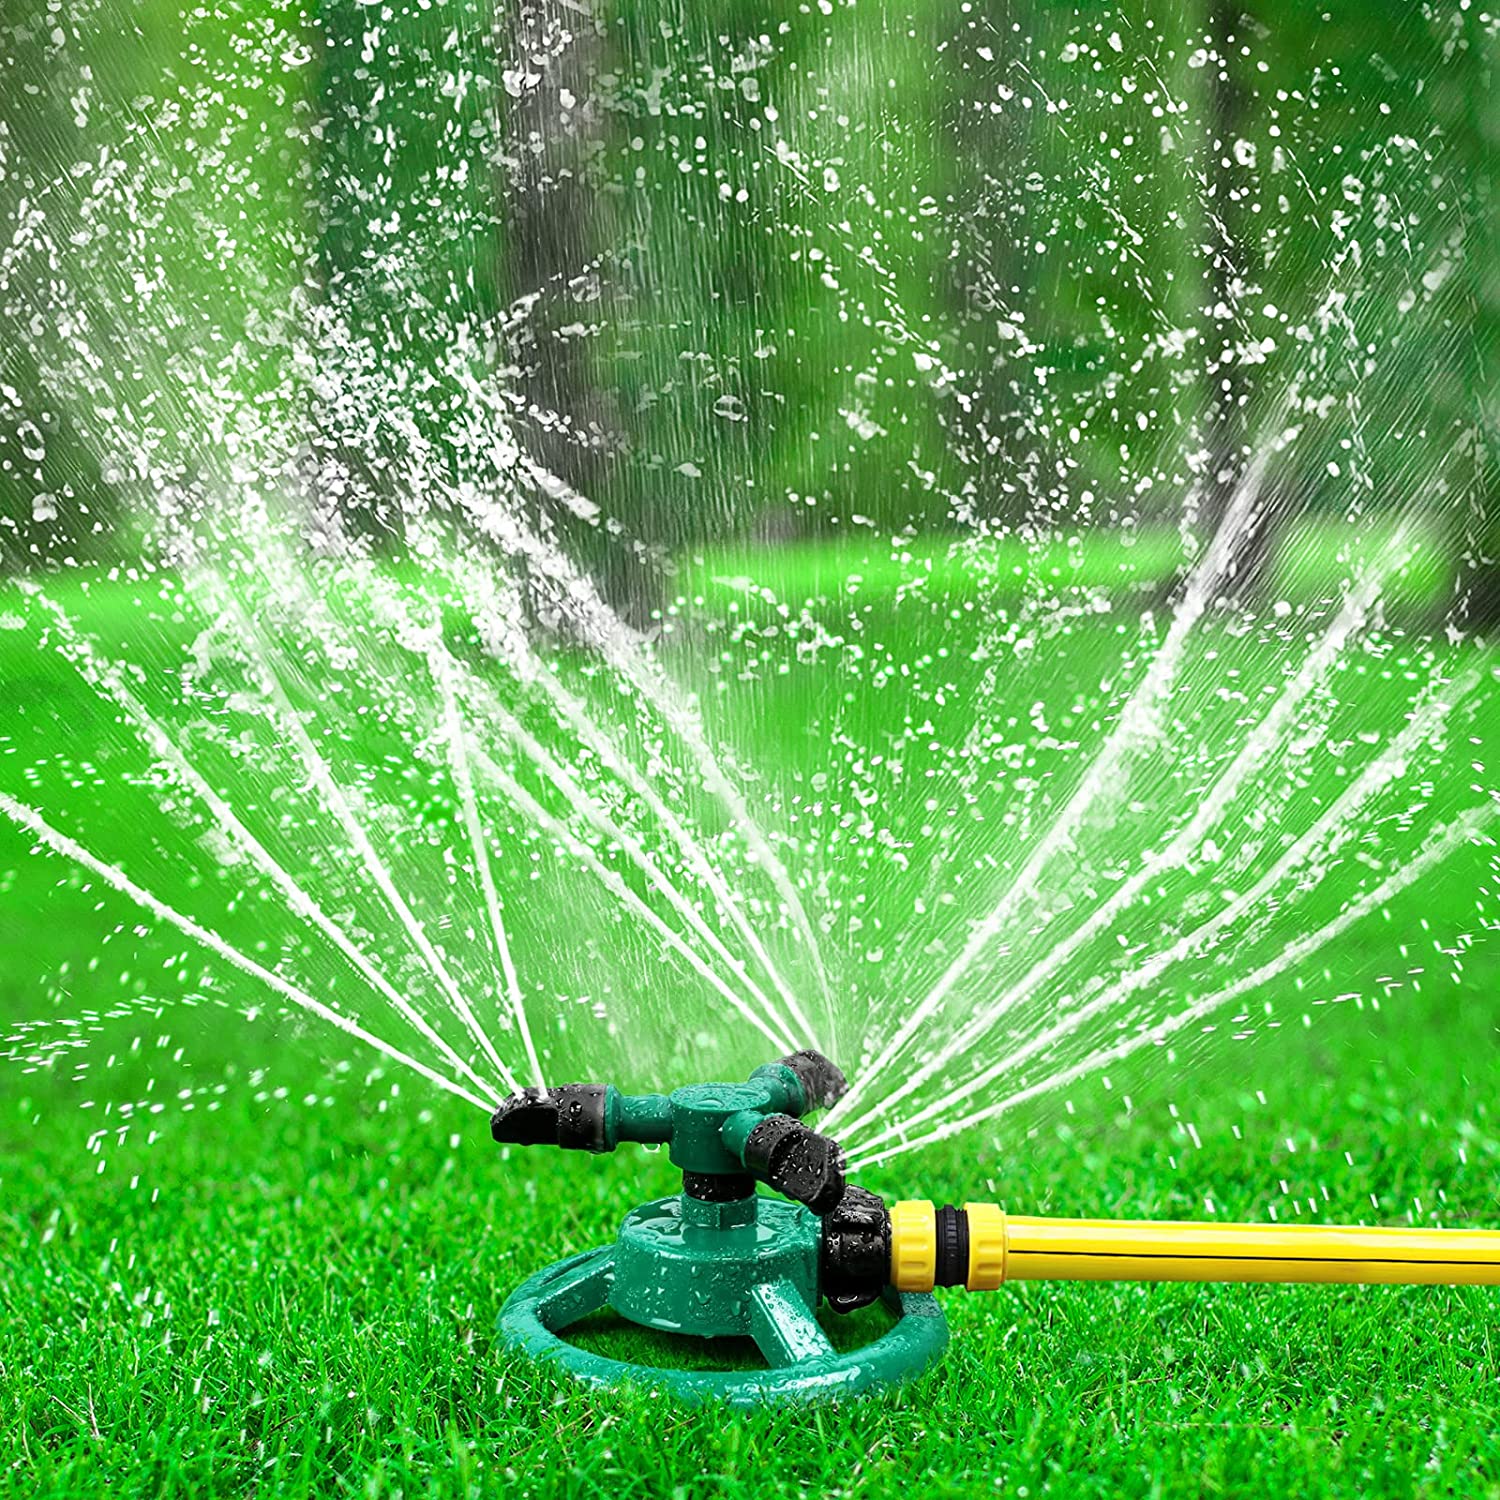 360° Rotating Water Sprinkler for Garden (Buy 1 Get 1 Free) MakerBazar.in